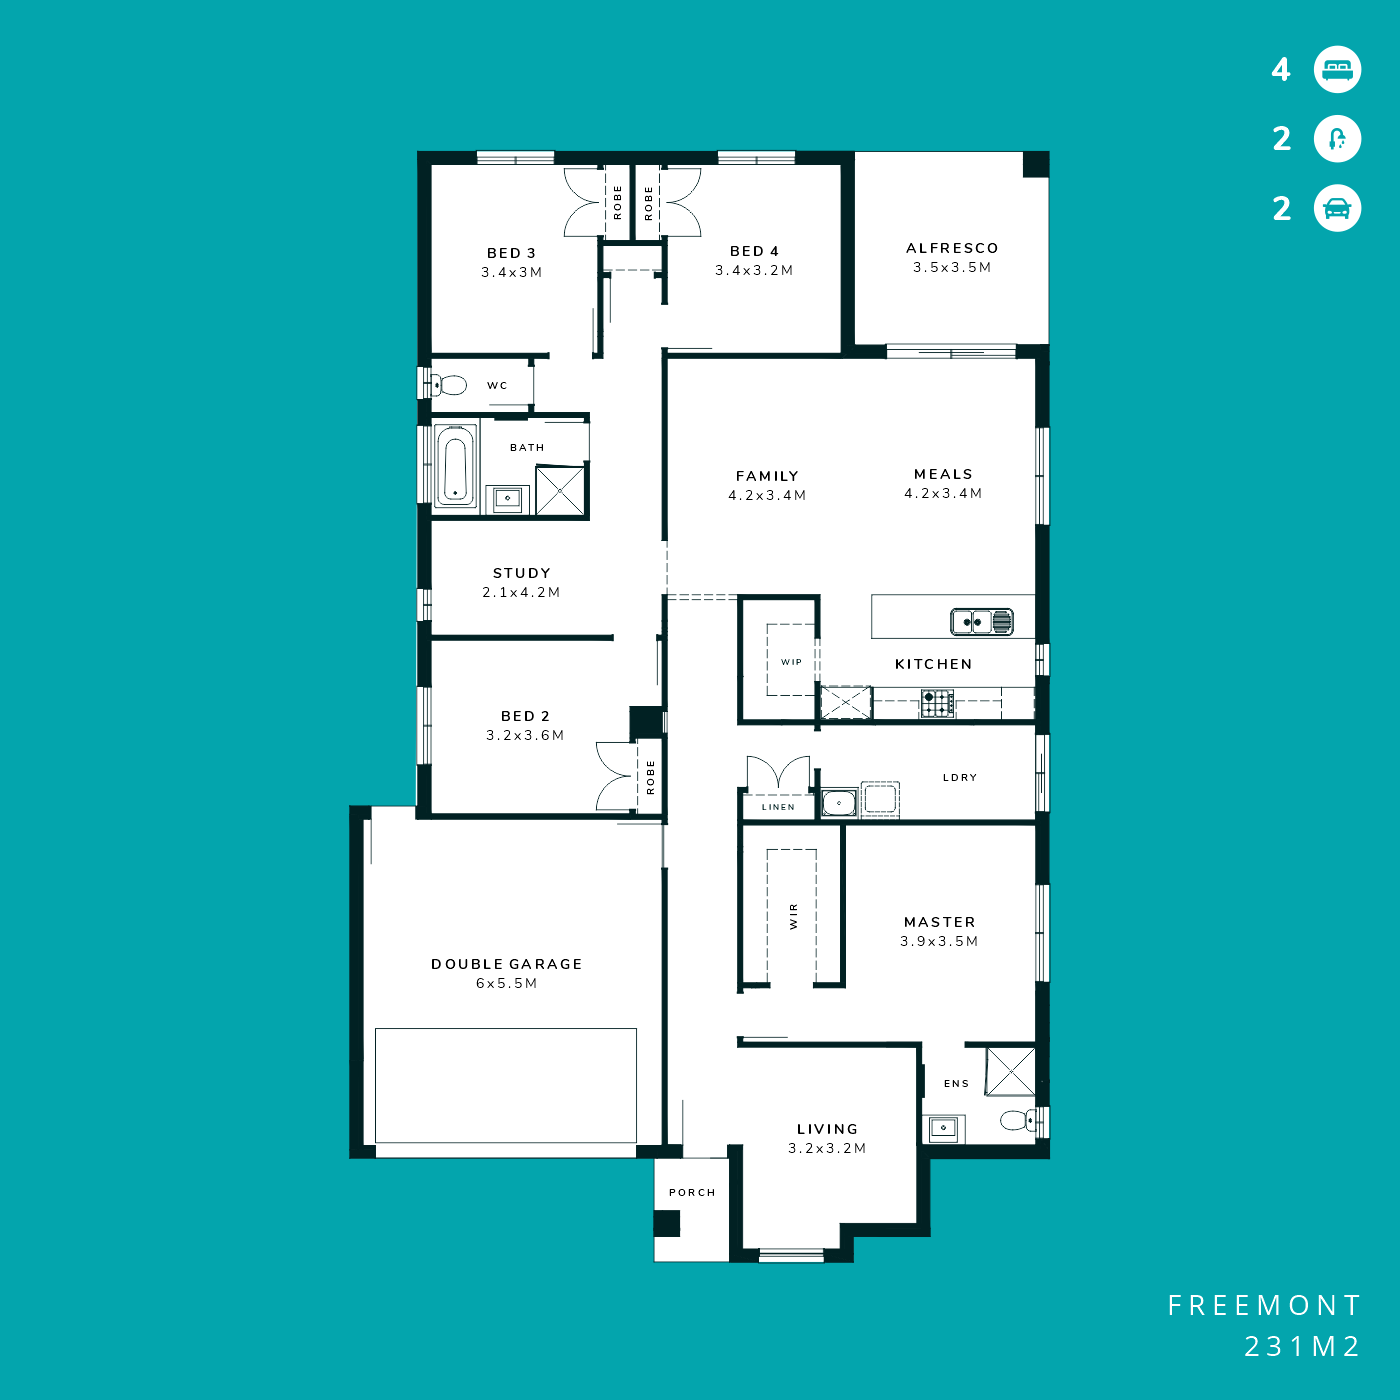 4 Bedroom Floorplan Victoria House & Land Design Low Deposit